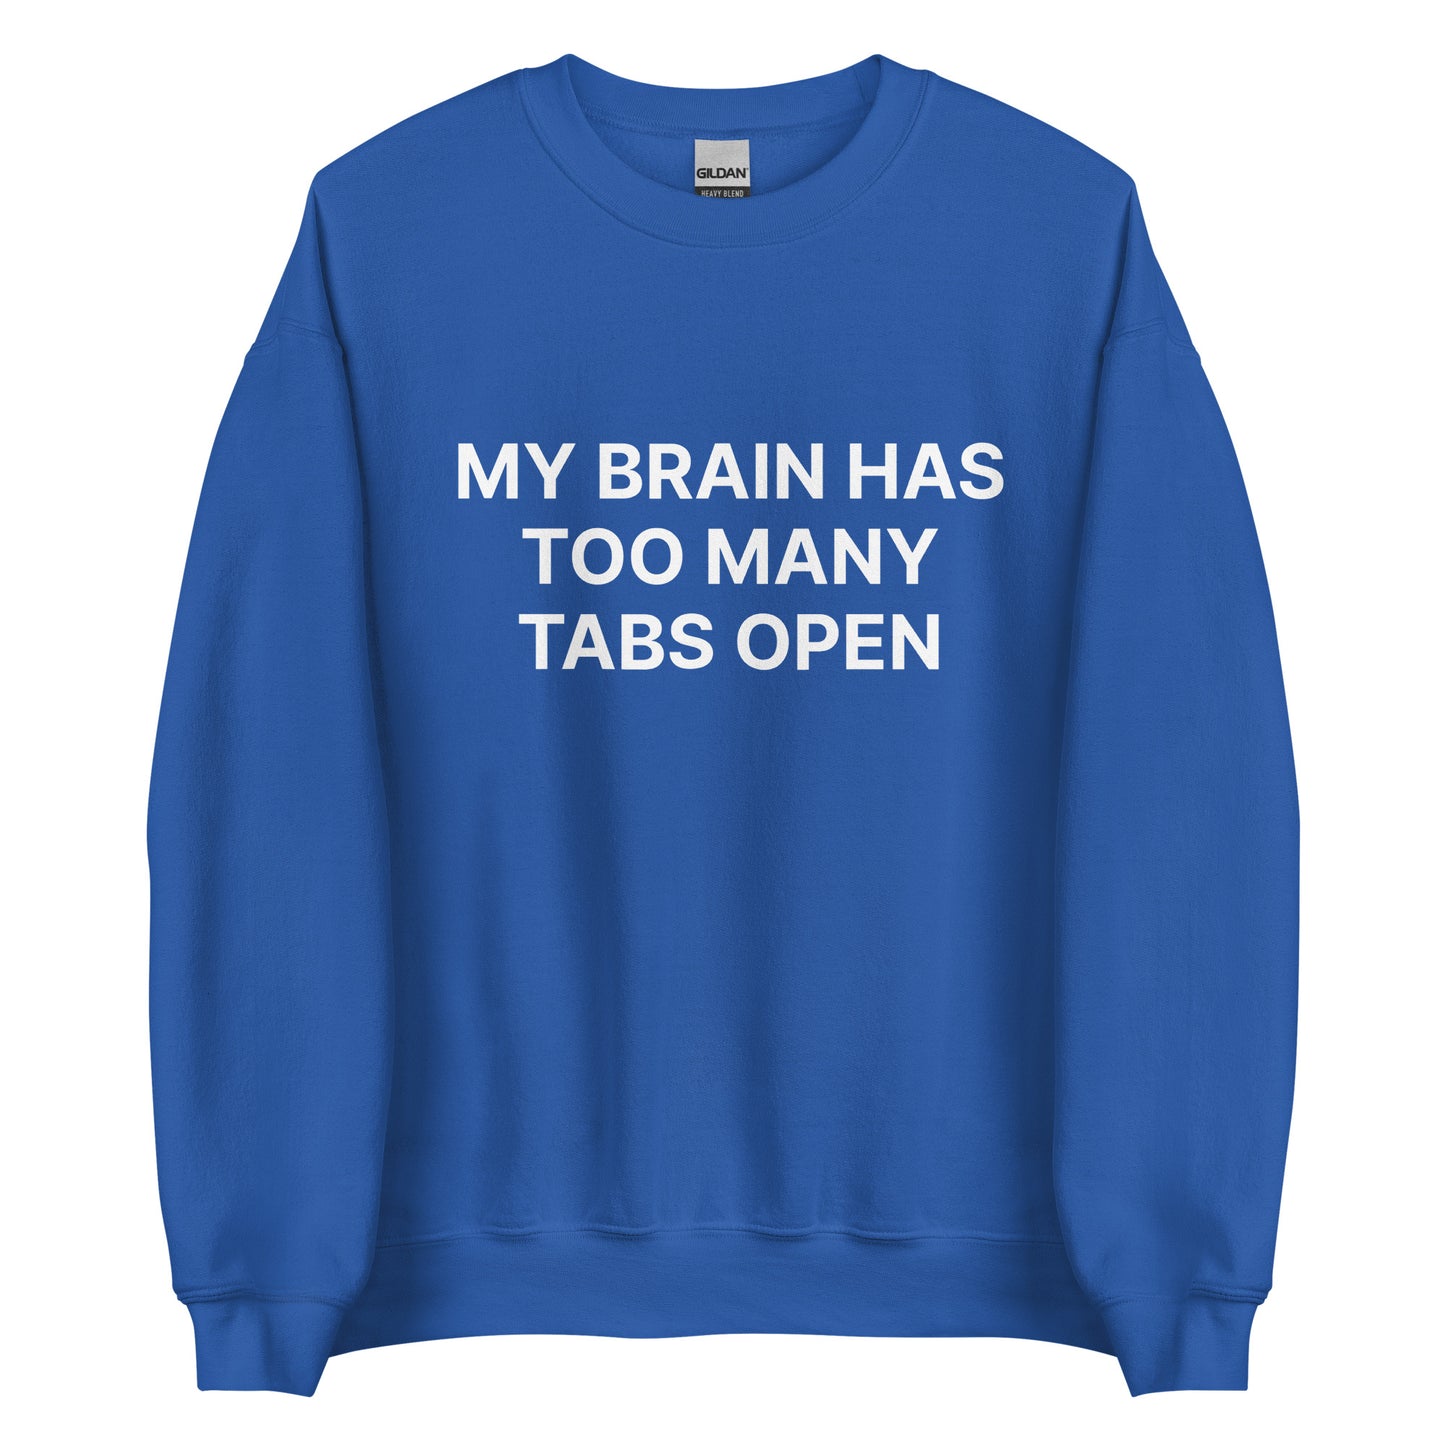 My Brain Has Too Many Tabs Open sweatshirt